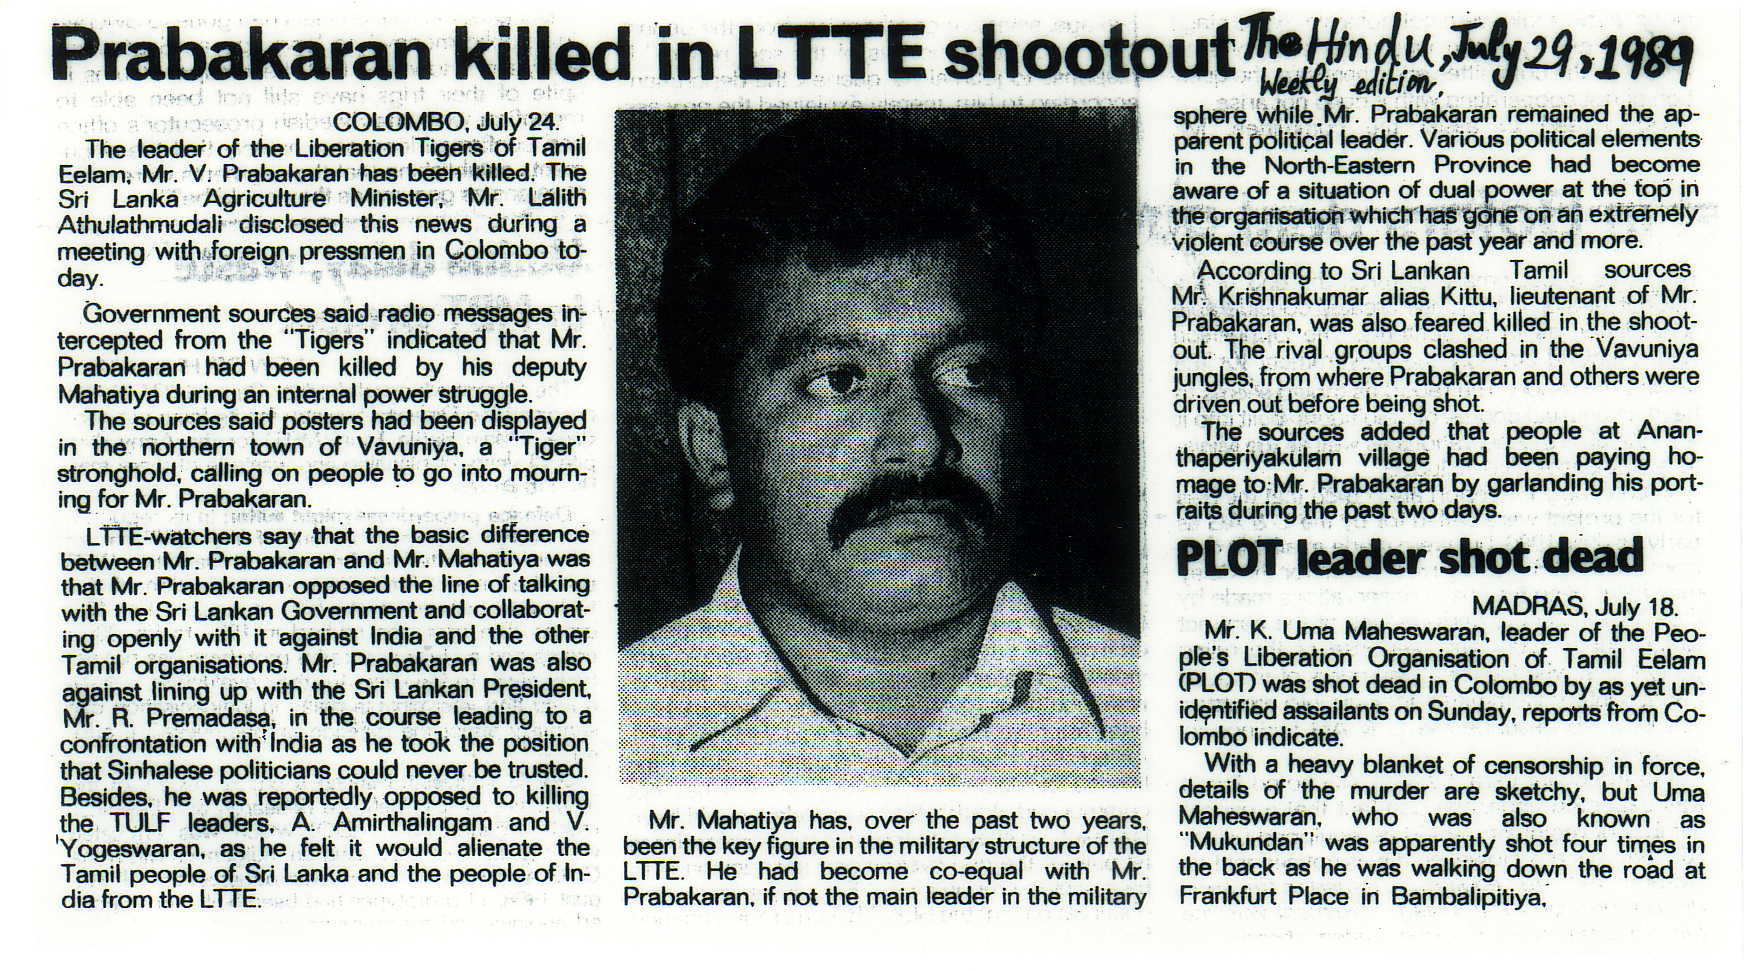 Prabakaran killed in LTTE shootout The Hindu 1989